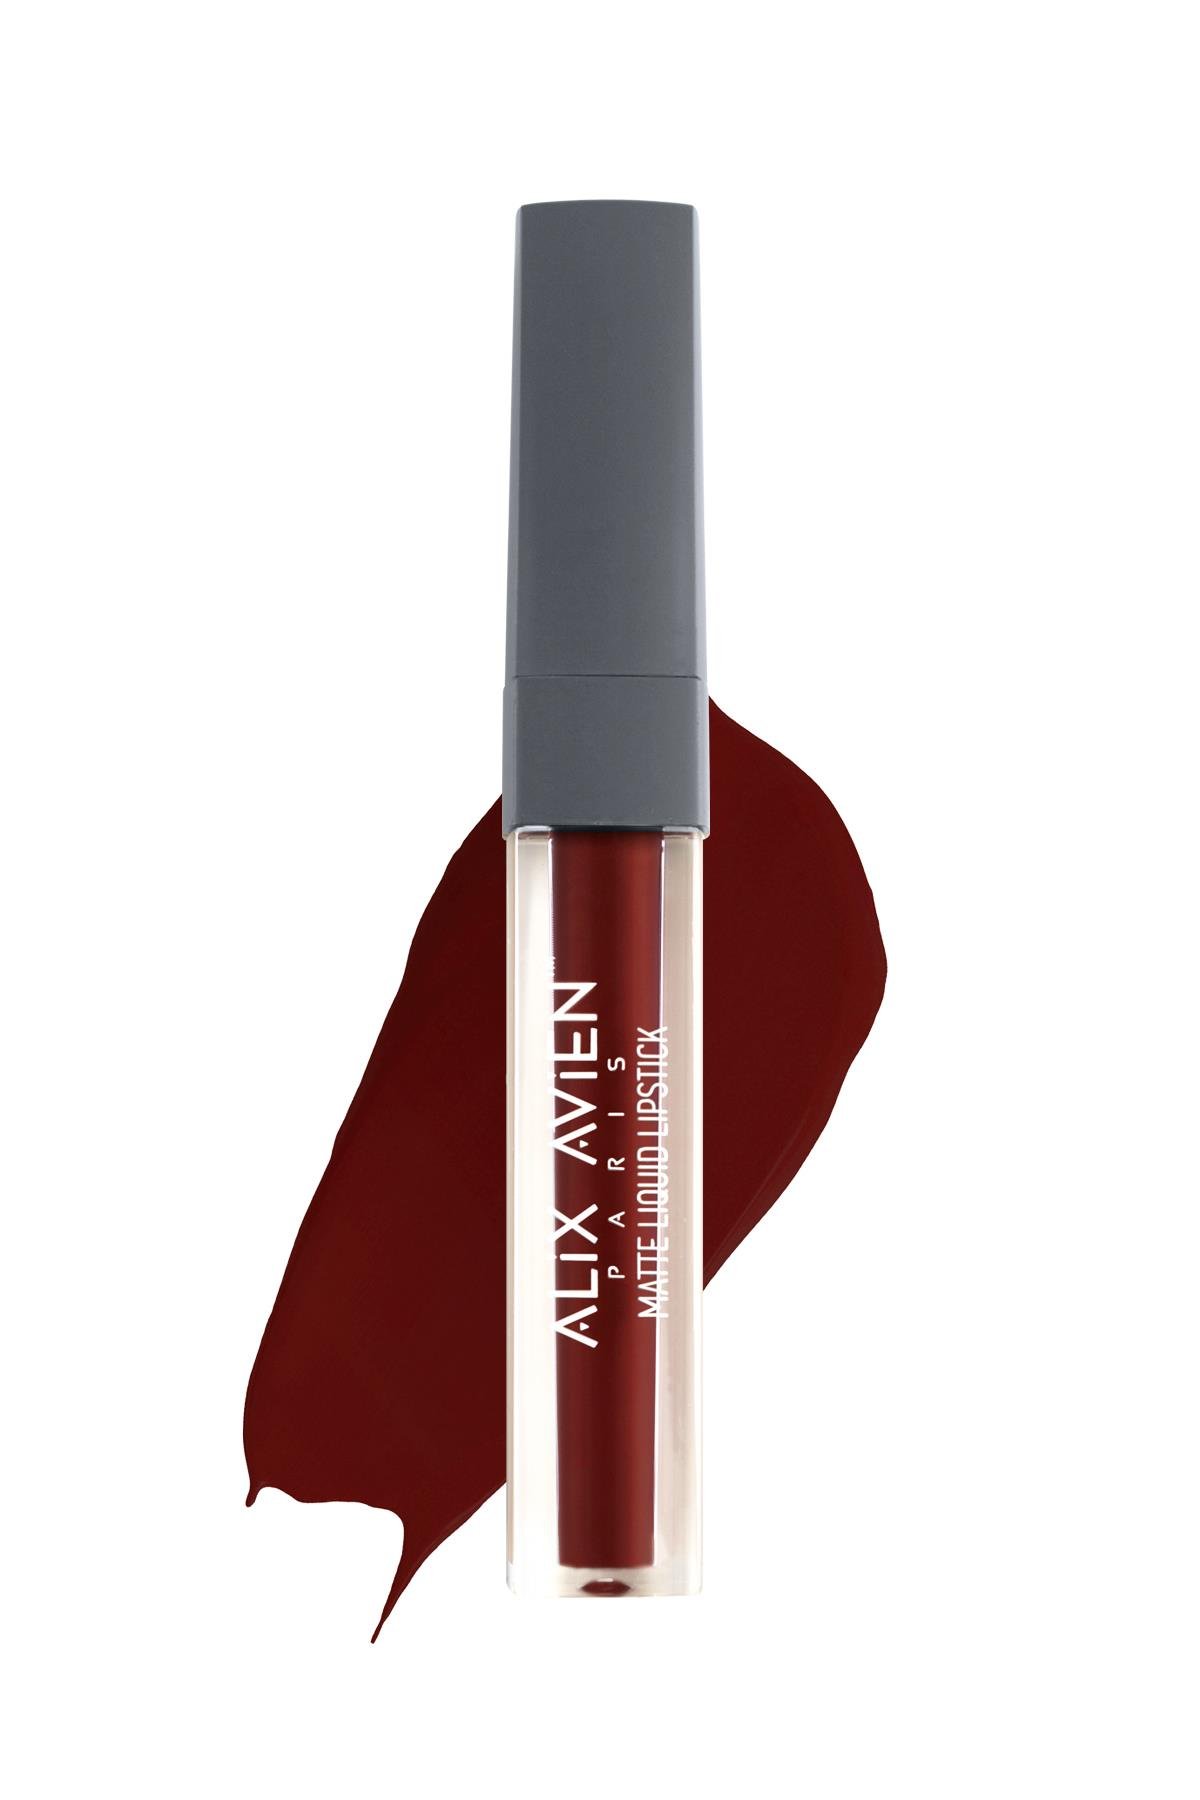 Mat Bitişli Likit Ruj - 8 Saate Kadar Kalıcı Etki - Matte Liquid Lipstick  524 Ruby Red - Alix Avien